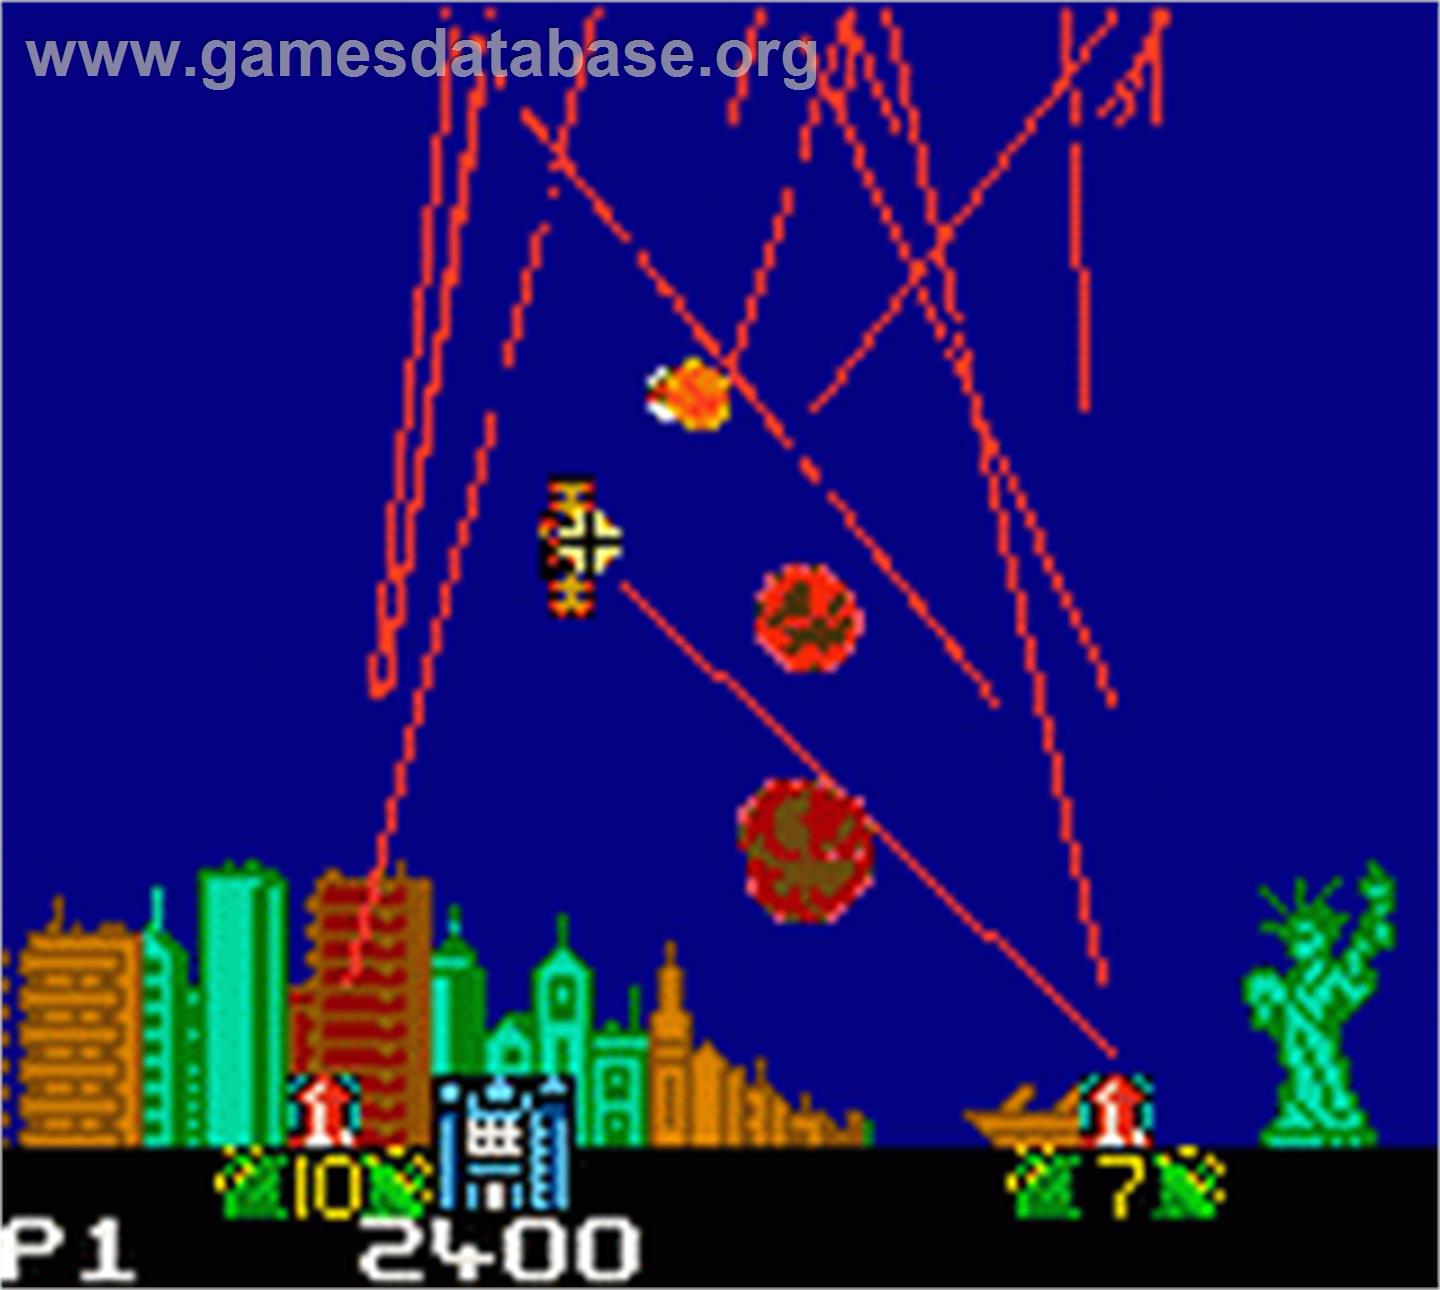 Missile Command - Nintendo Game Boy Color - Artwork - In Game